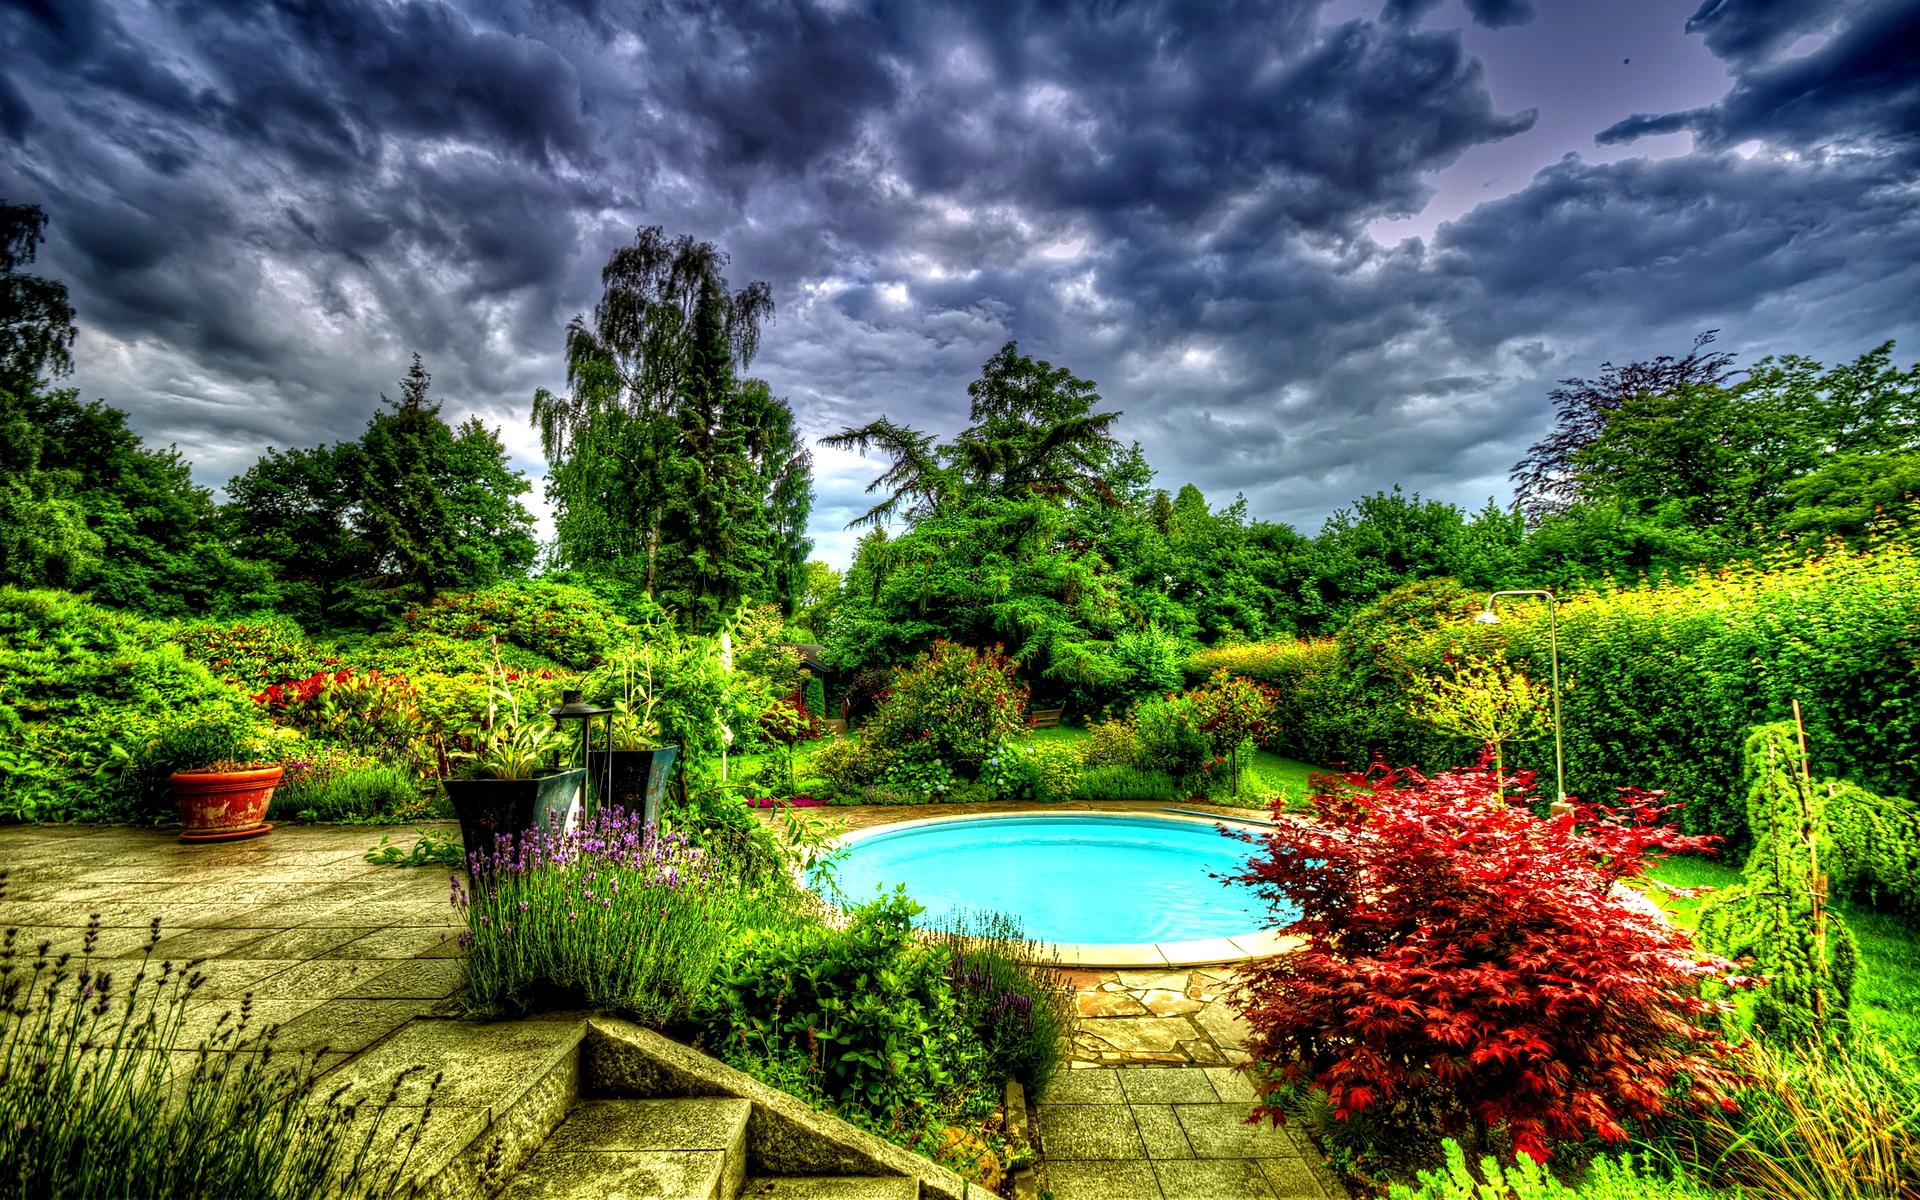 Garden before the storm